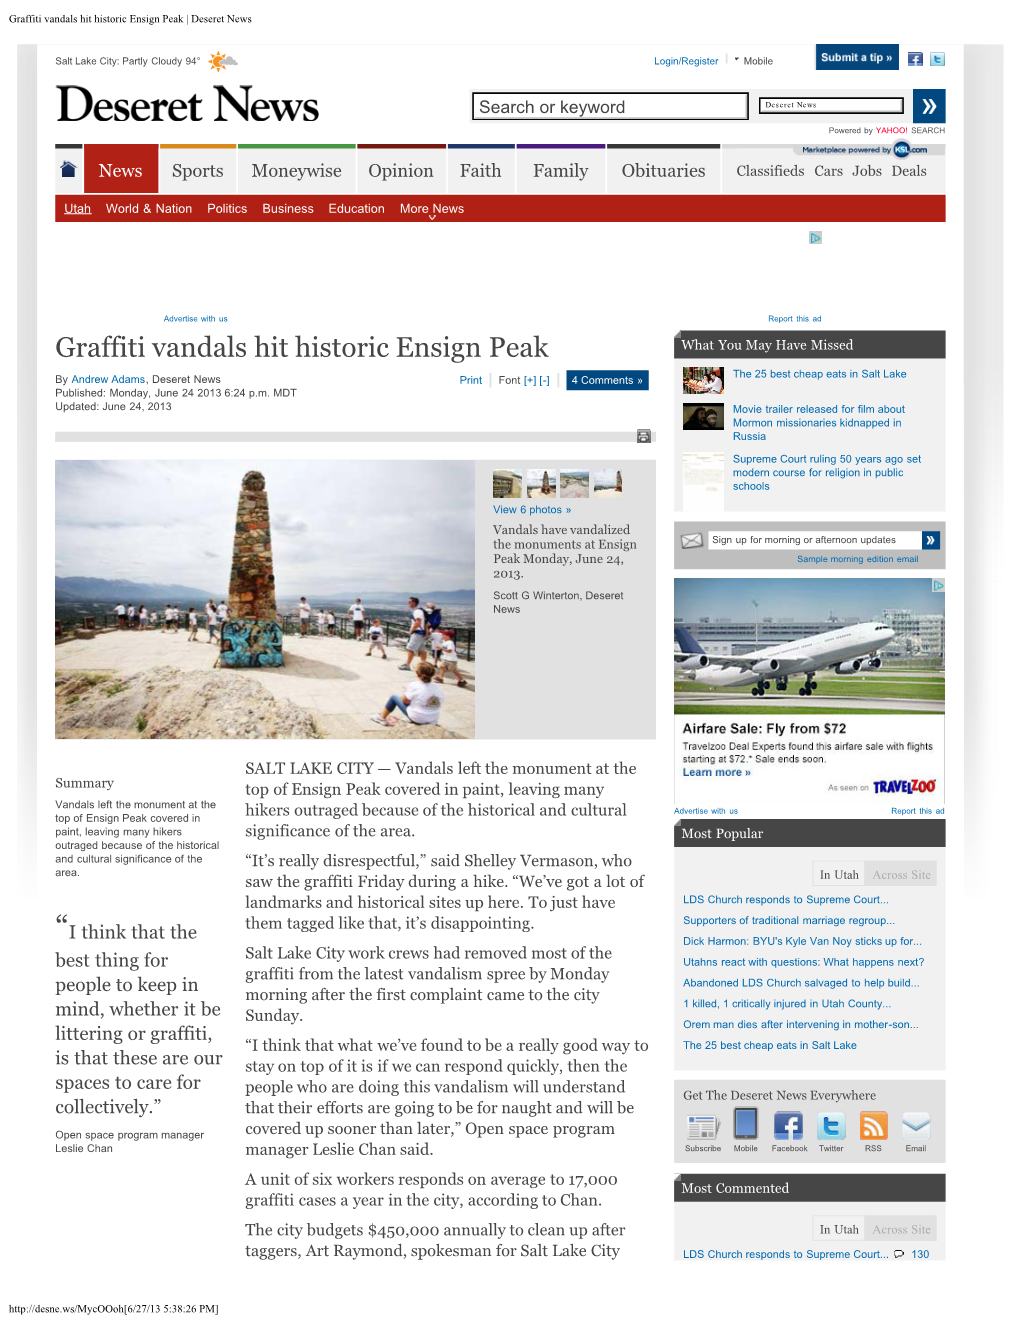 Graffiti Vandals Hit Historic Ensign Peak | Deseret News